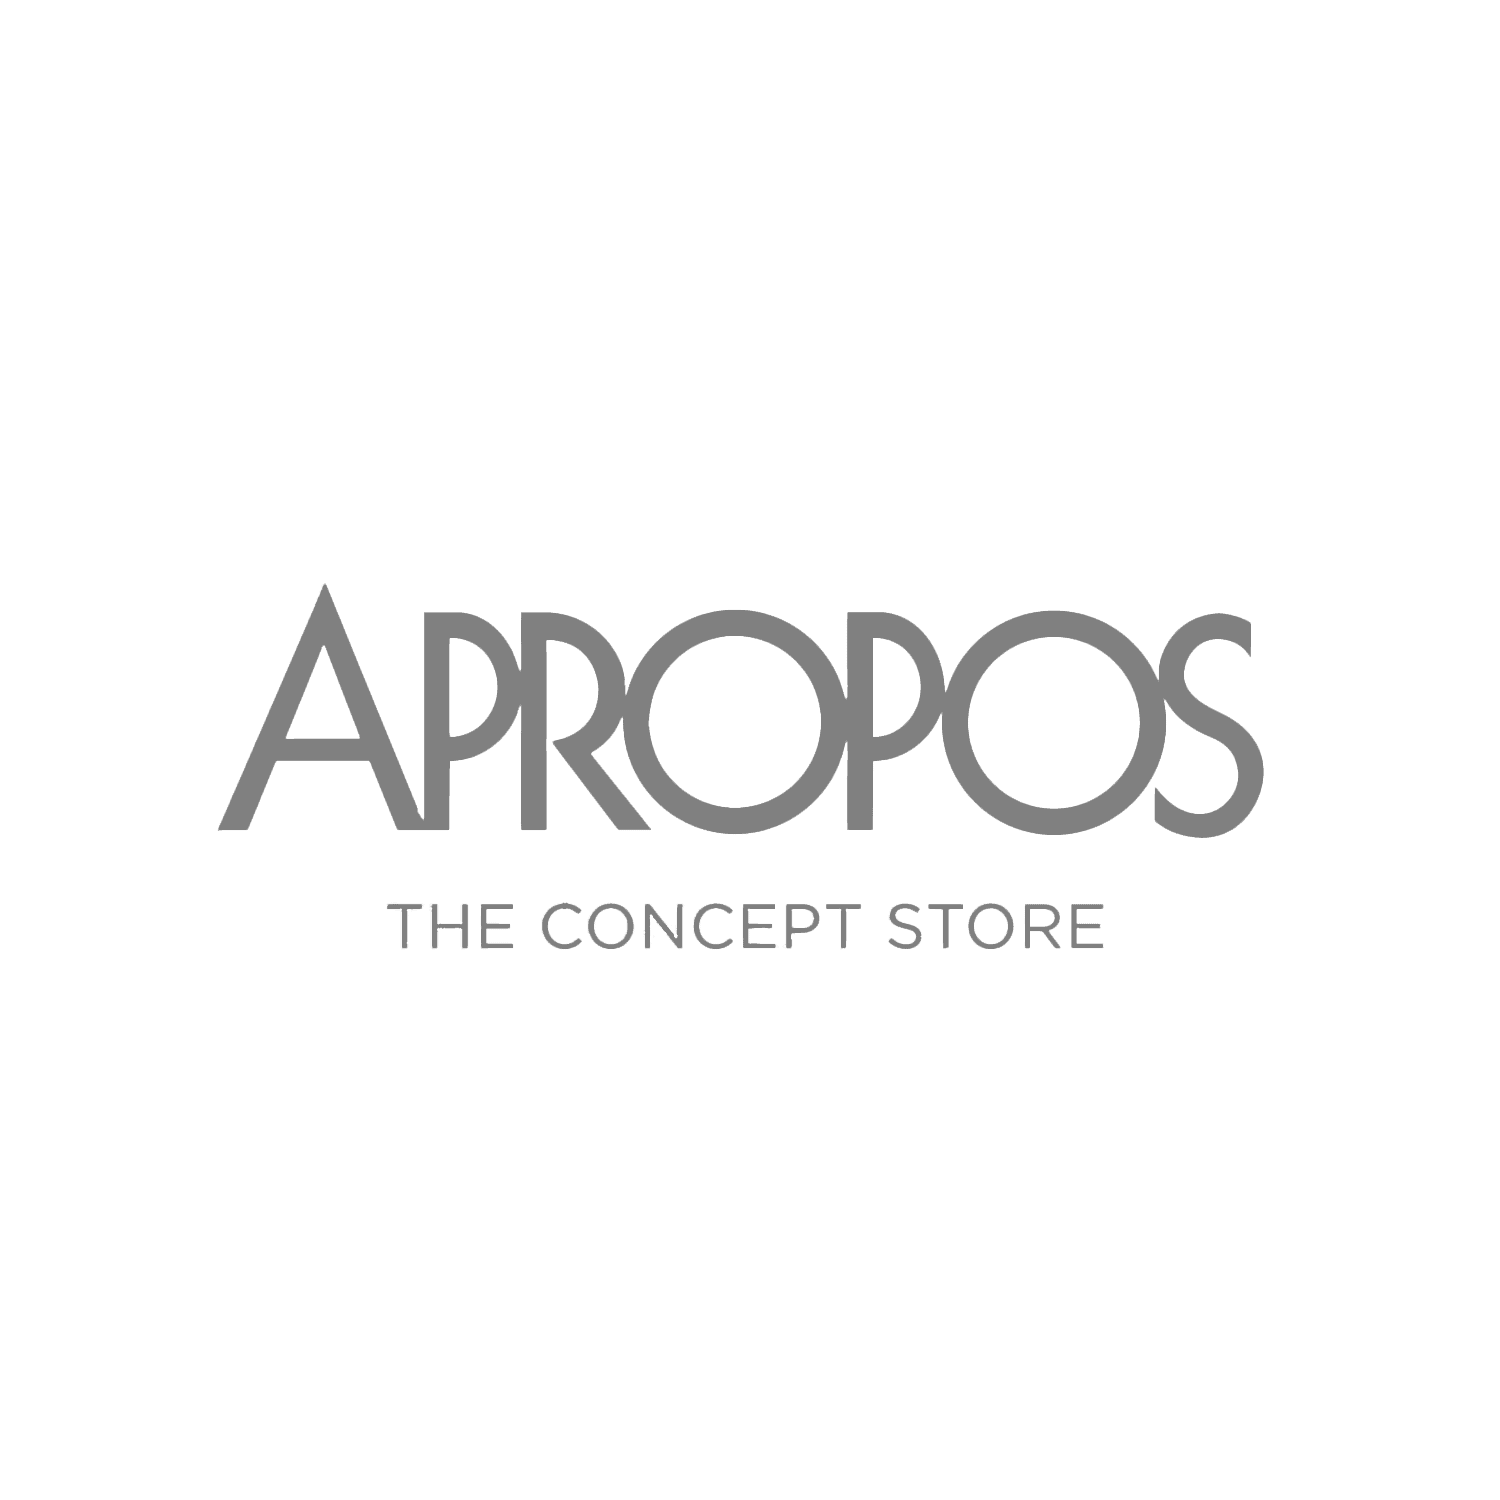 Logo Apropos The Concept Store